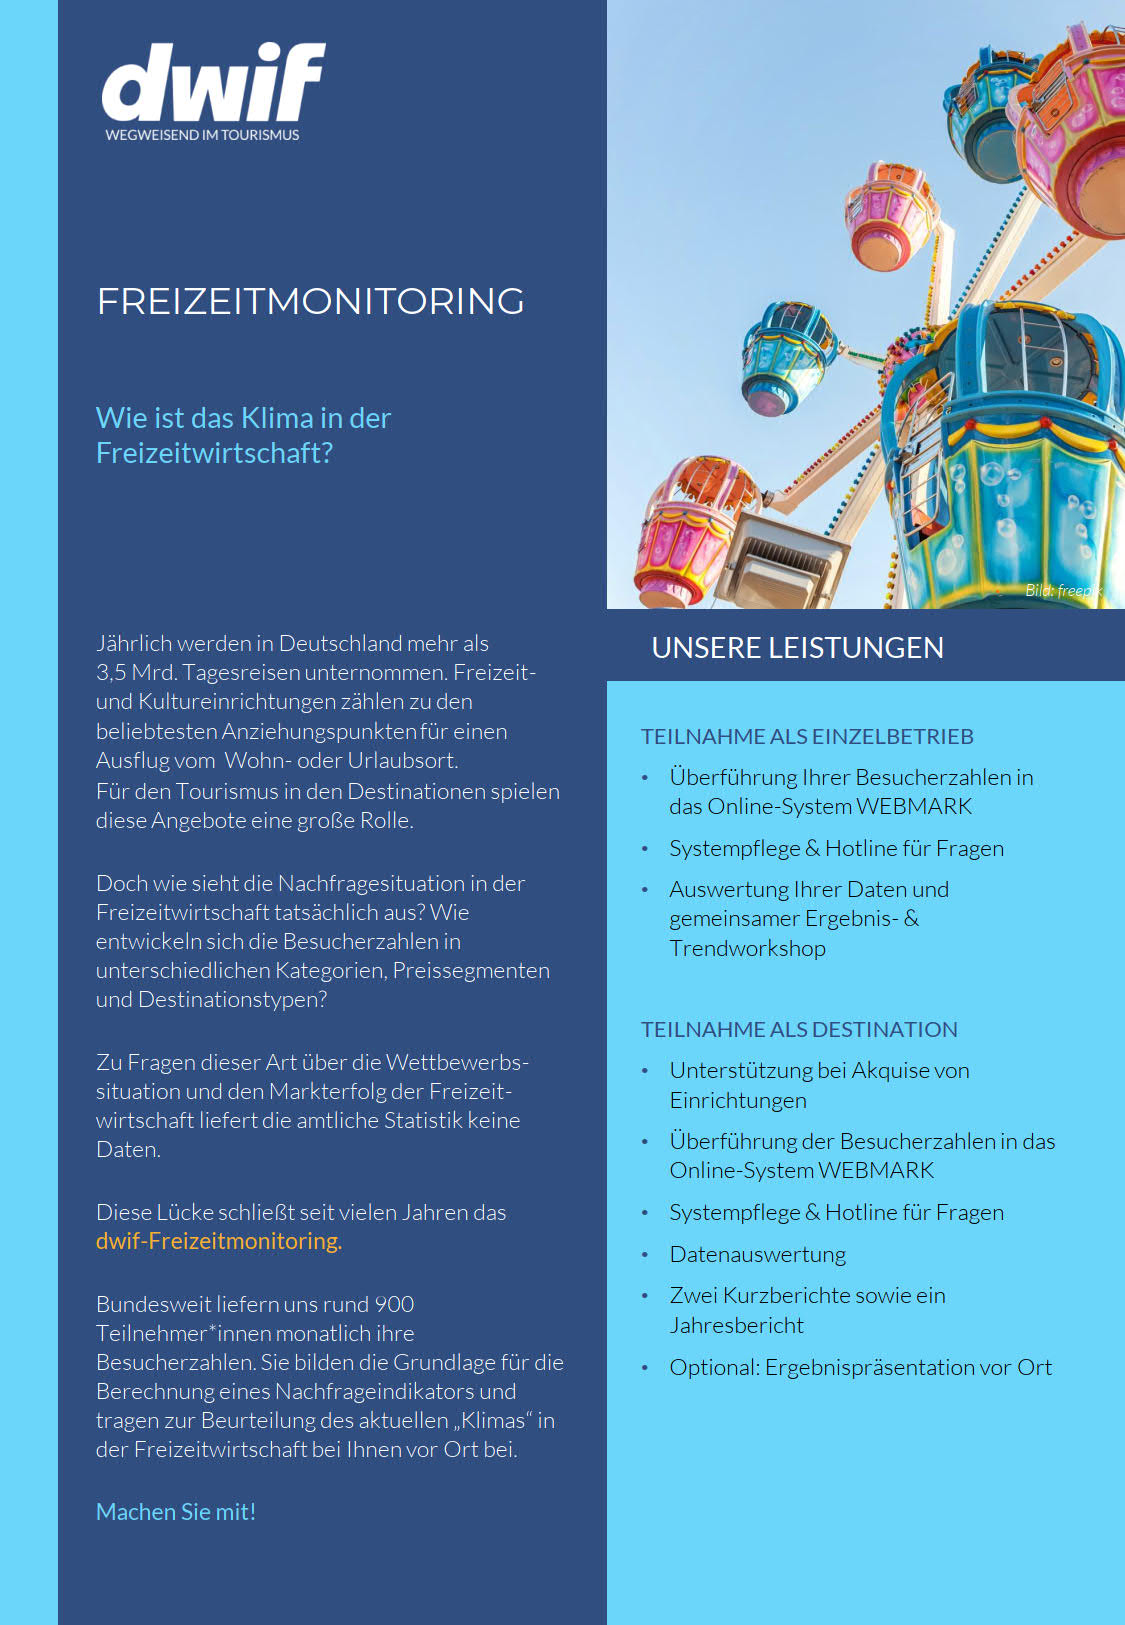 dwif Freizeitmonitoring Flyer Cover